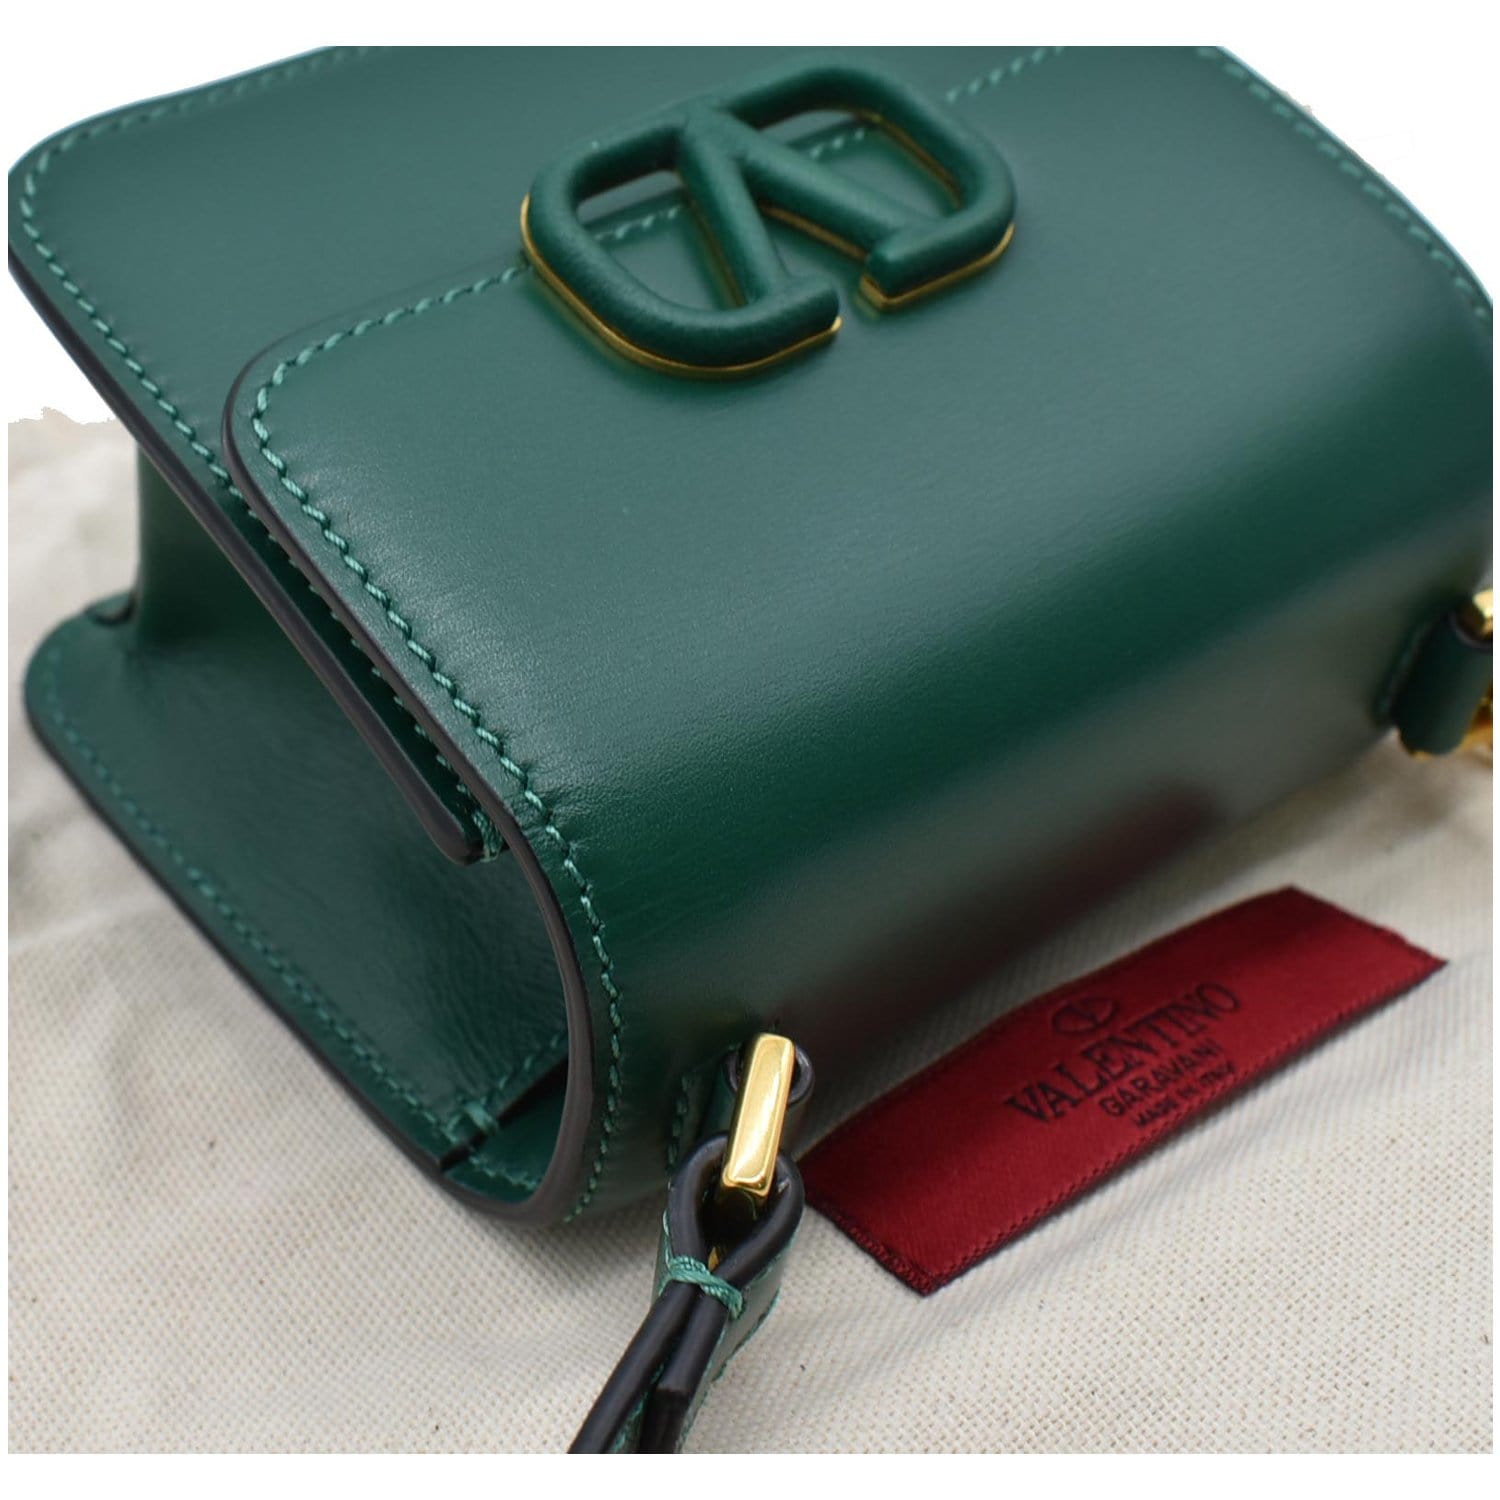 VALENTINO Garavani Vsling Micro Leather Shoulder Bag Green